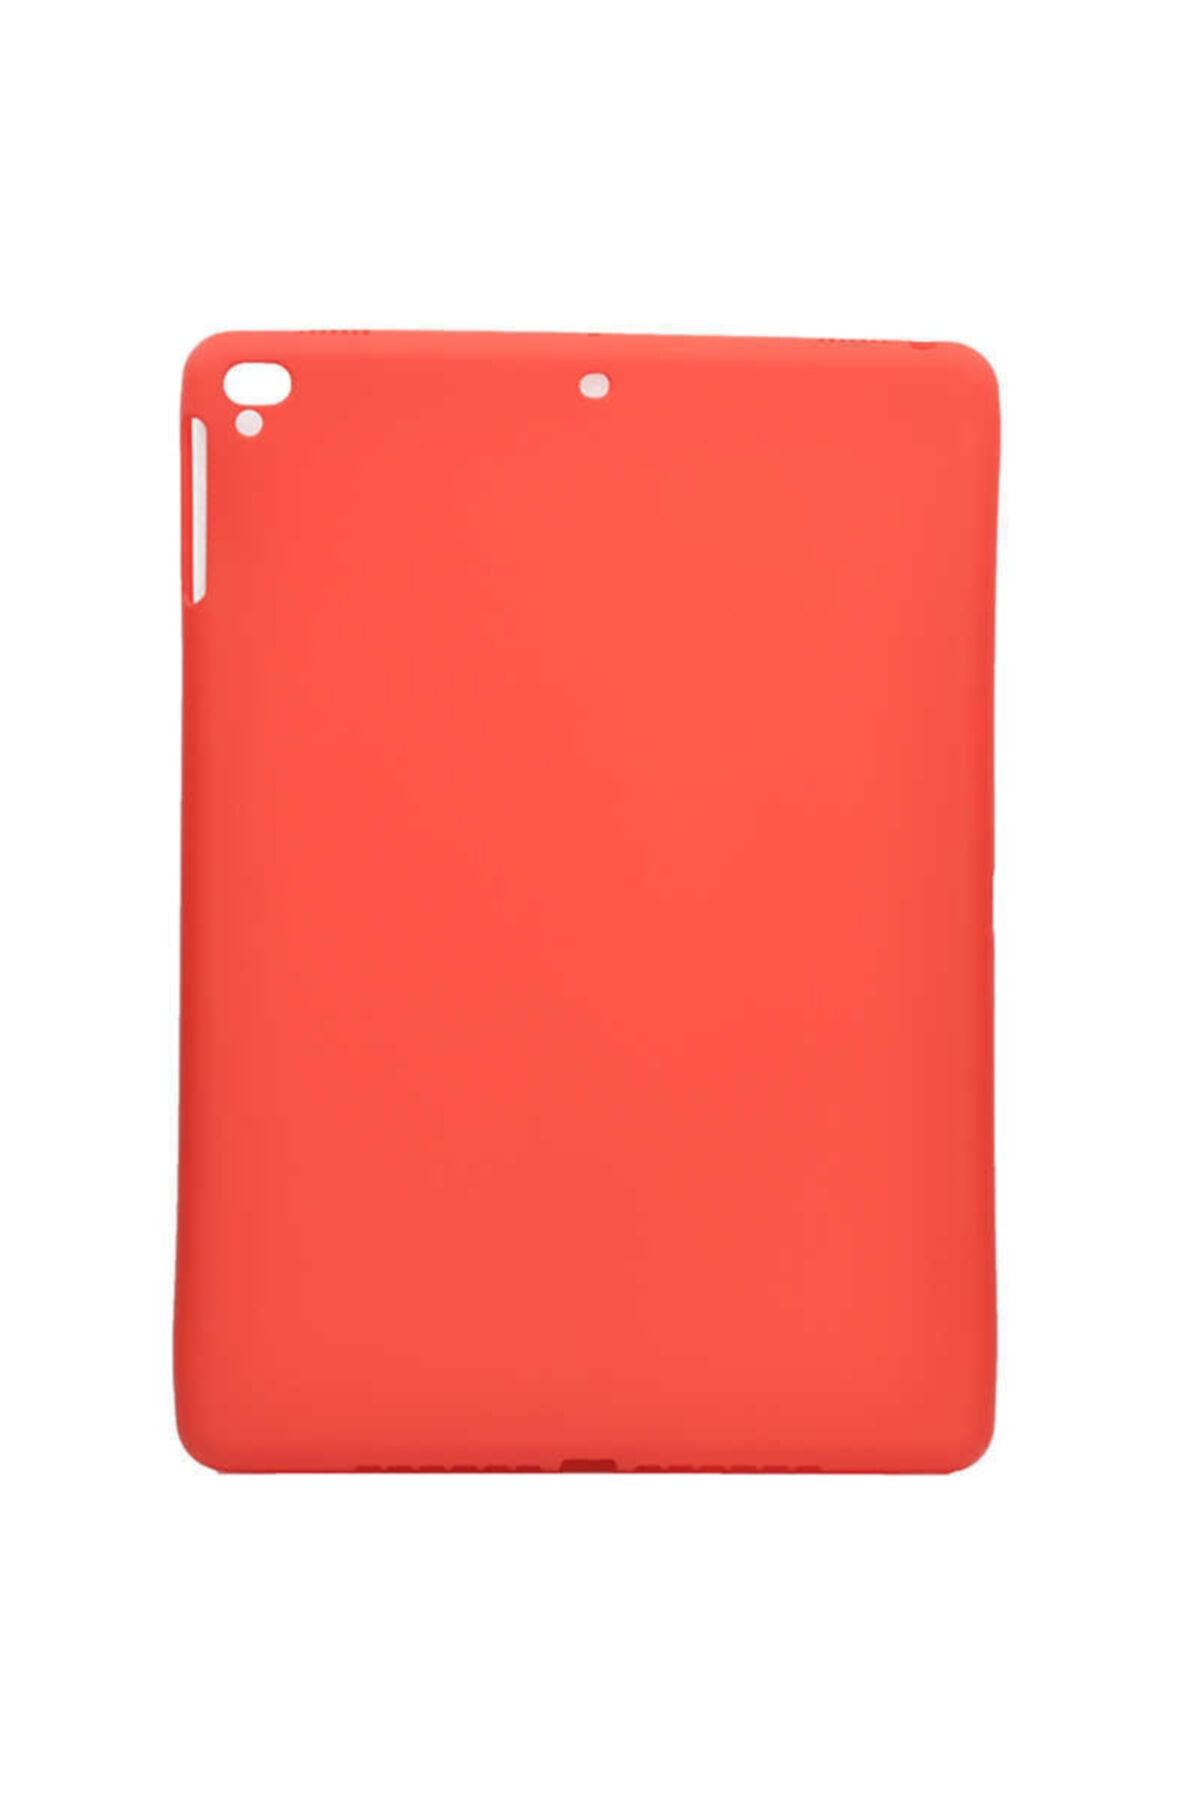 Zore Apple Ipad 9.7 2017 Kılıf Sky Tablet Silikon Kırmızı